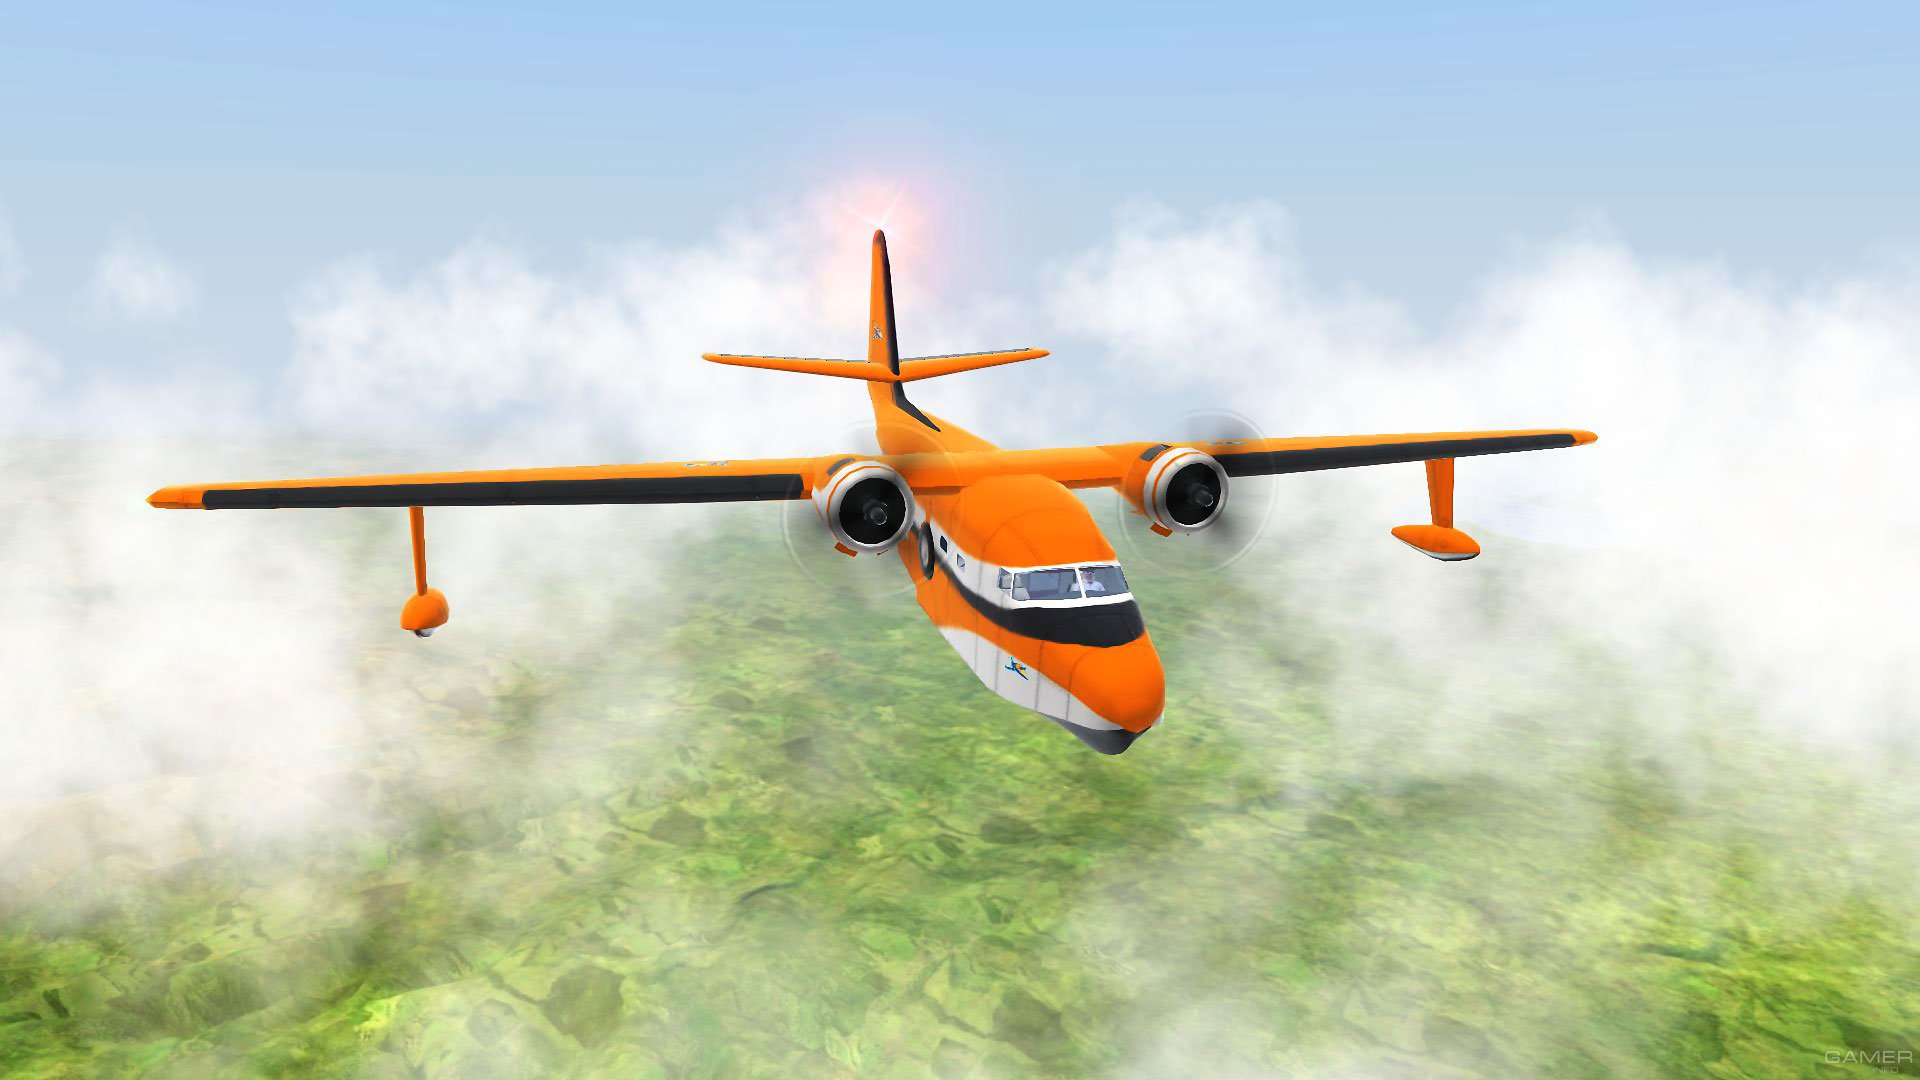 best flight simulator for mac 2016